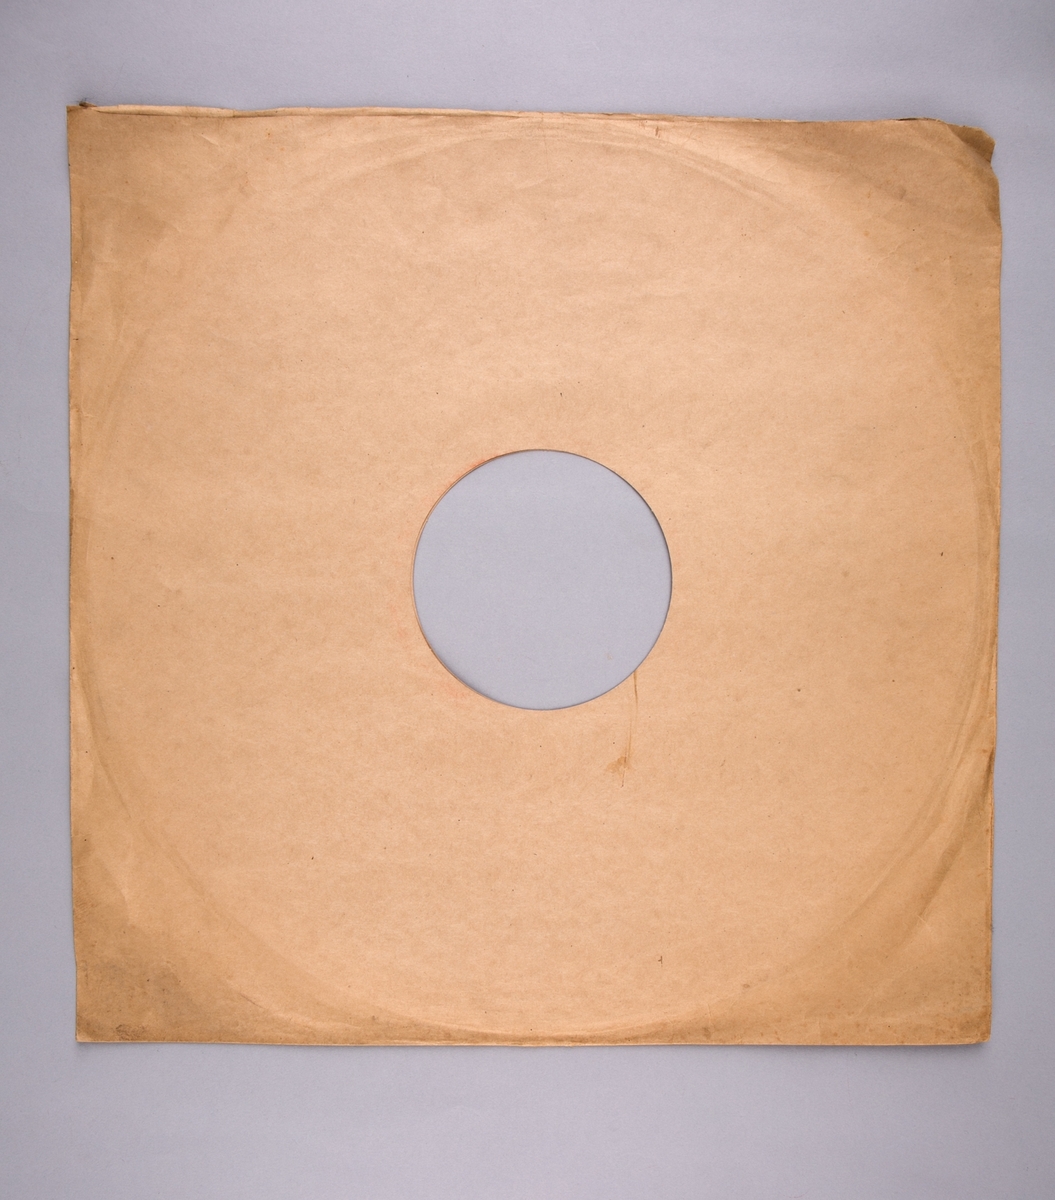 Grammofonplatesamling. LP-plate med tittel "Armed Forces Radio Service" utgitt av War and Navy Departements. Plate i svart vinyl spilles på platespiller med 33 1/3 omdreininger i minuttet (33-plate). I plateomslag.